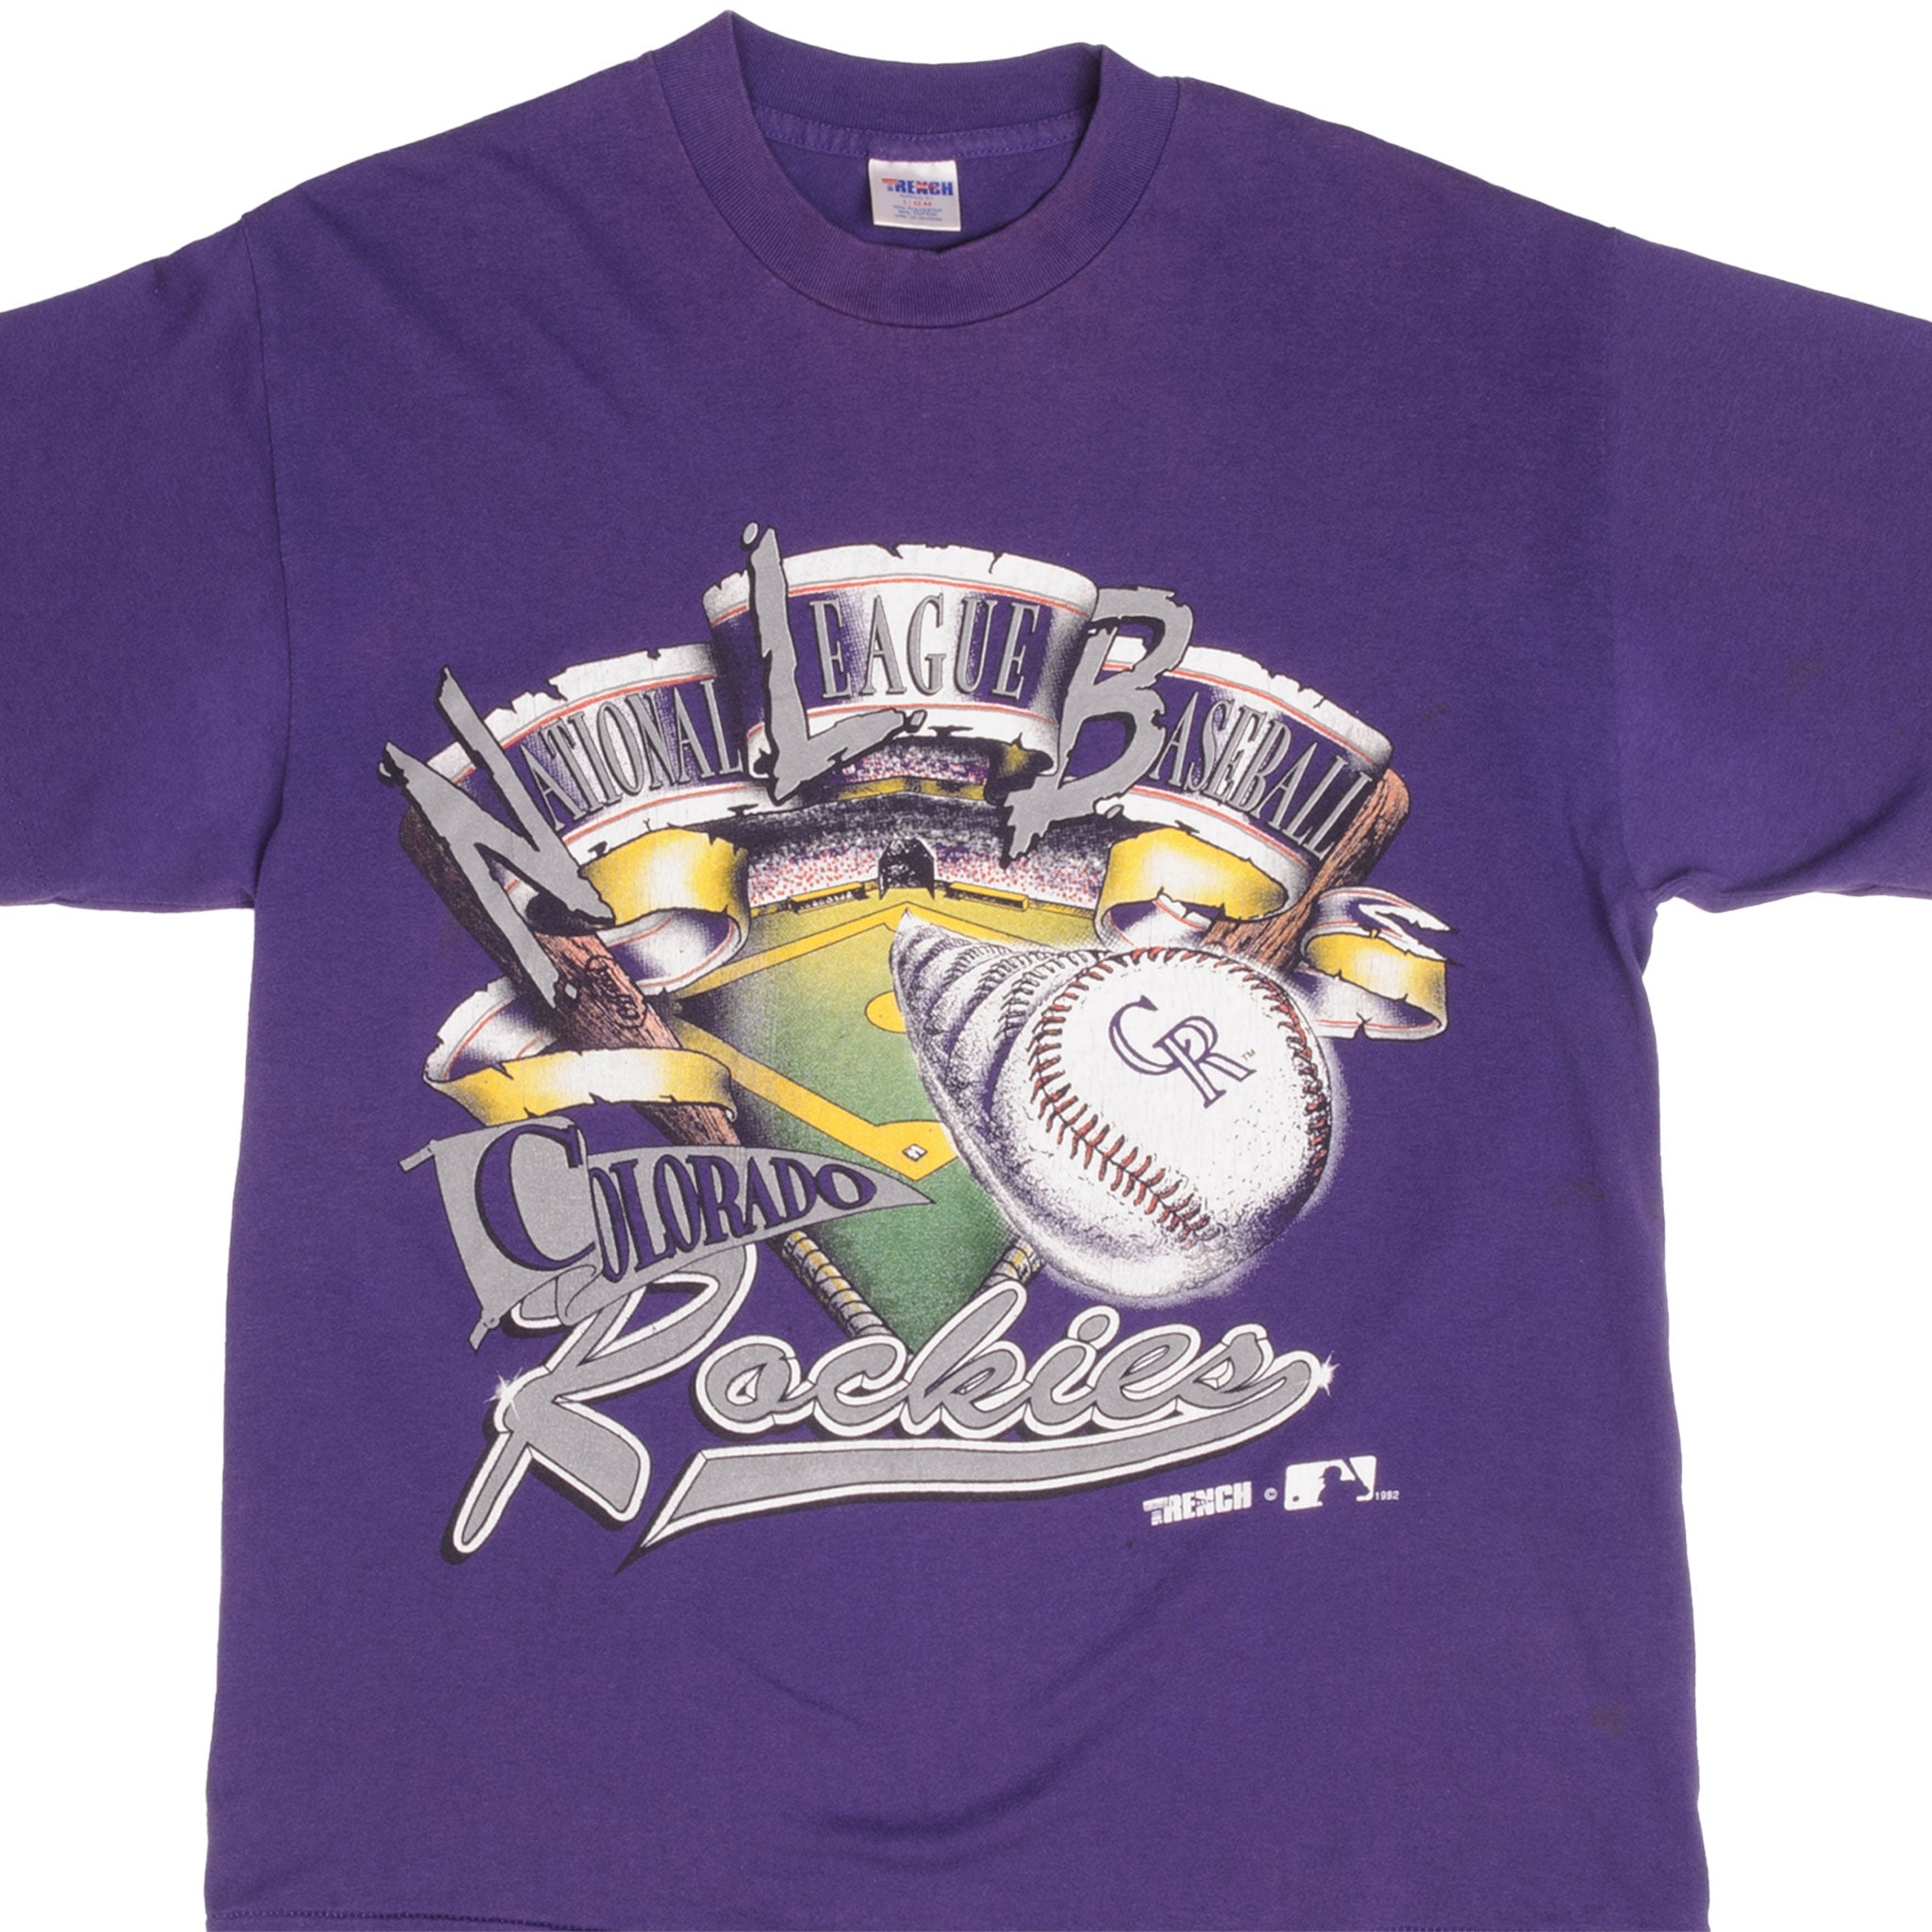 Colorado Rockies Vintage MLB Crewneck Sweatshirt Hoodie Shirt